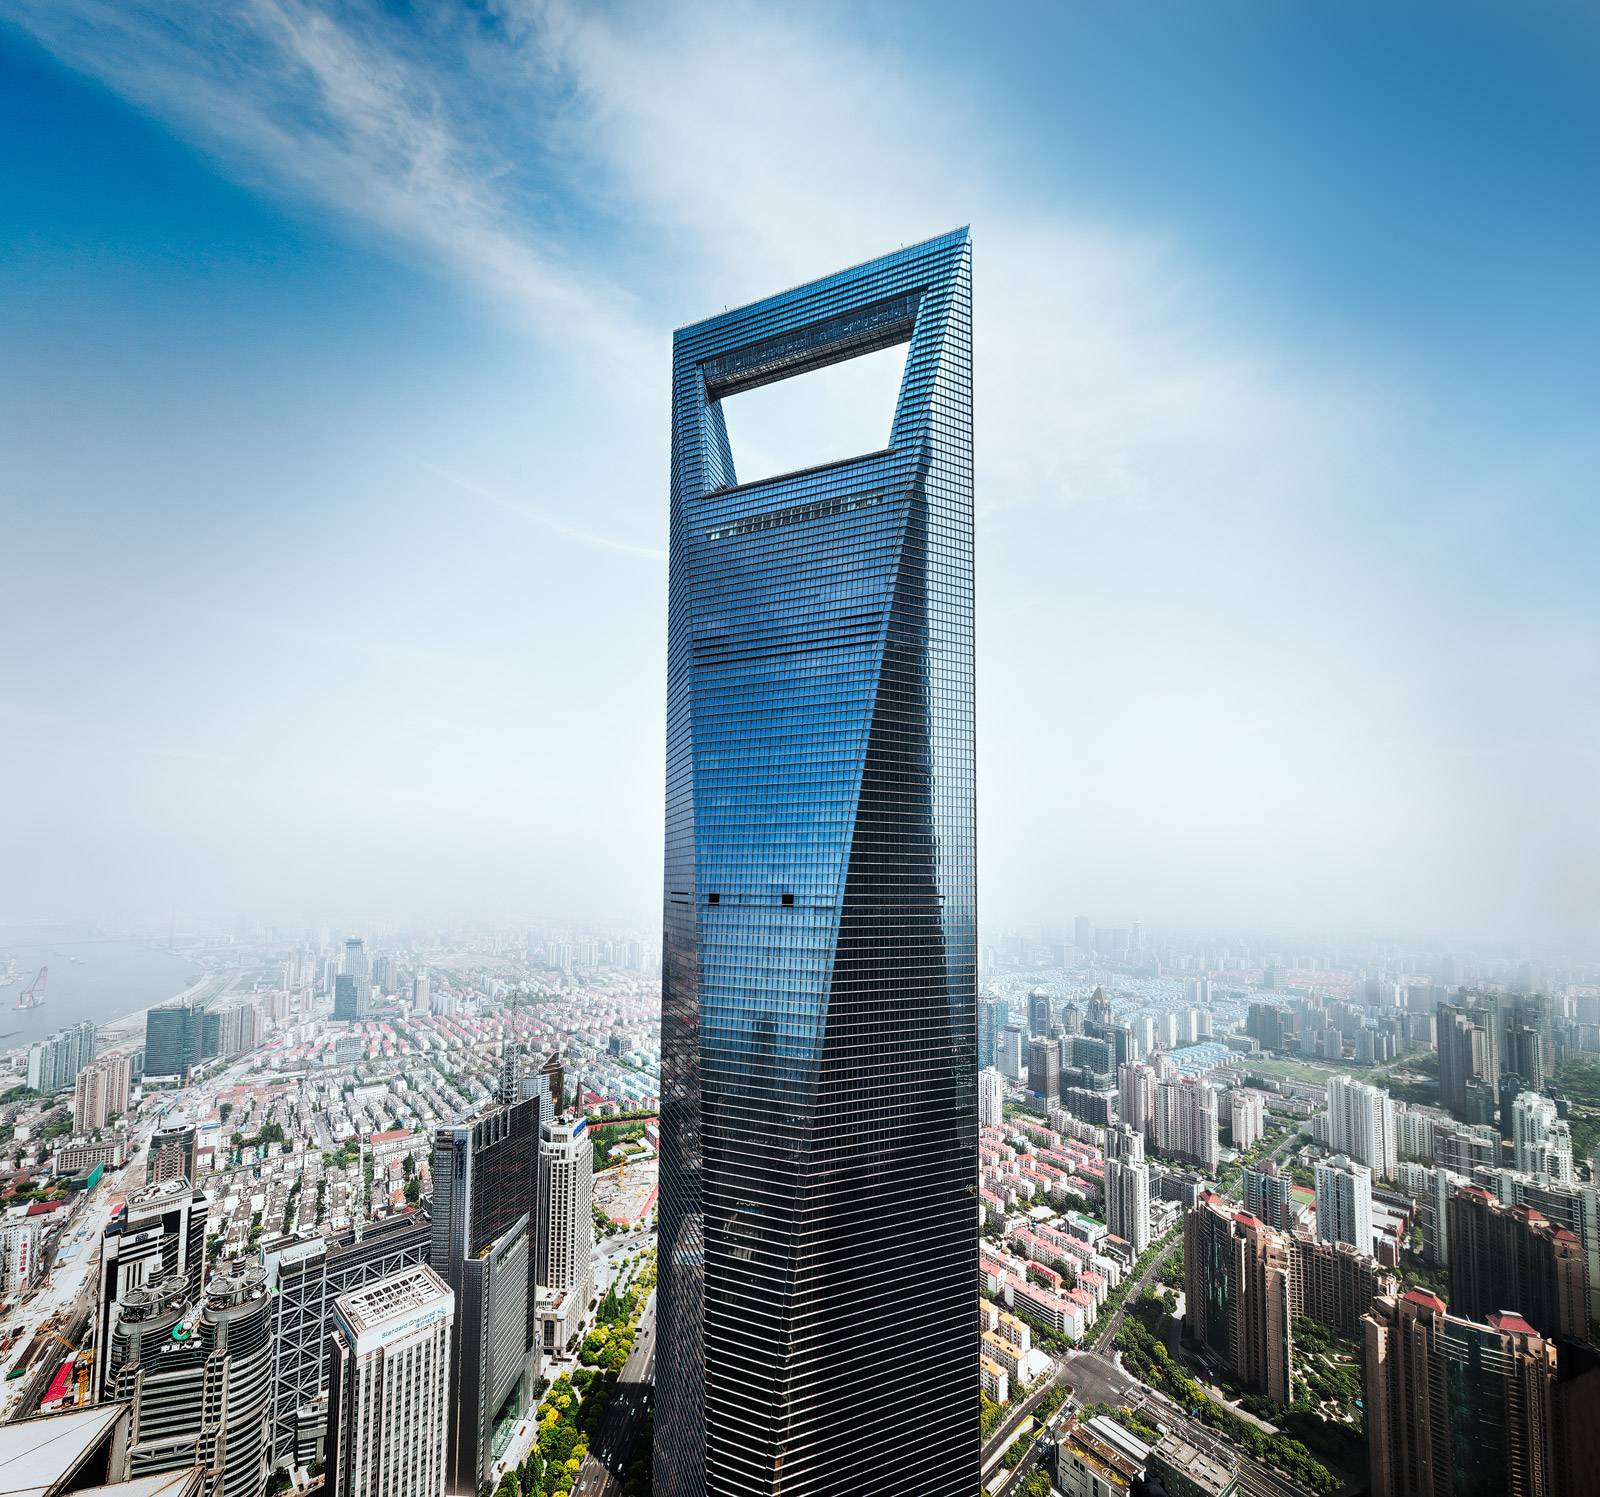 Shanghai World Financial Center - SWFC